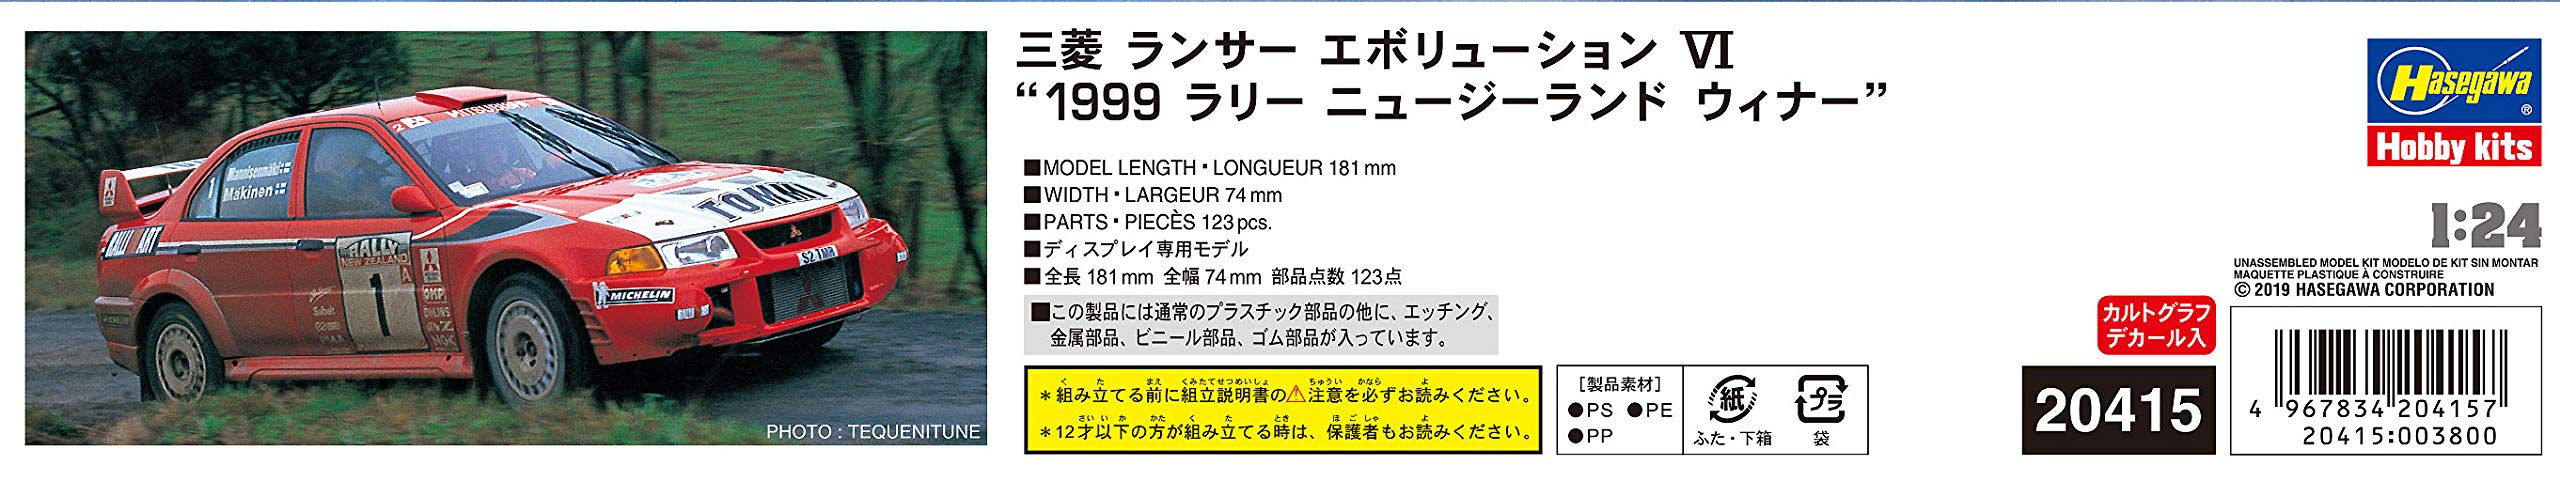 Hasegawa 20415 Mitsubishi Lancer Evolution VI 1999 Rally New Zealand Winner 1/24 Scale Kit